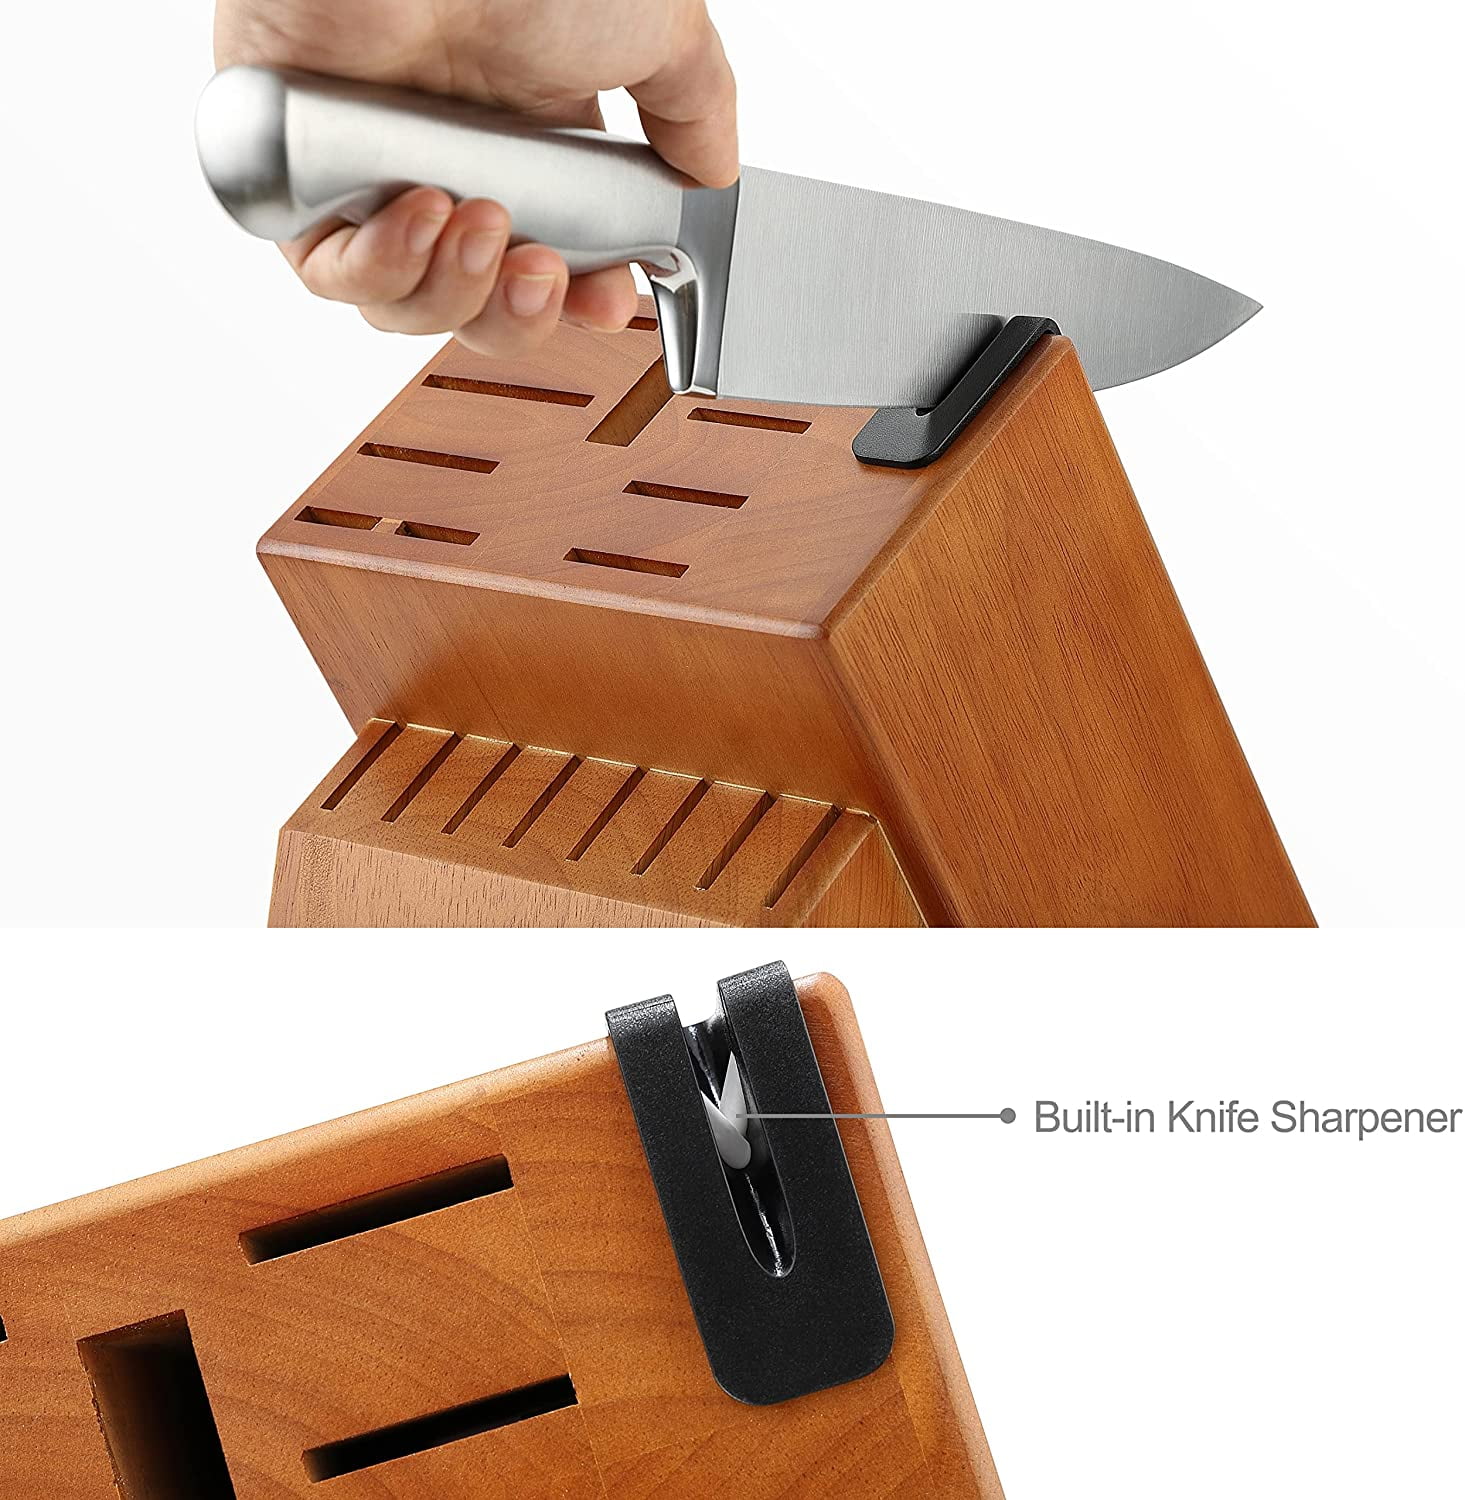  McCook® Kitchen Knife Sets,German Stainless Steel Knives Block  Set with Built-in Sharpener: Home & Kitchen